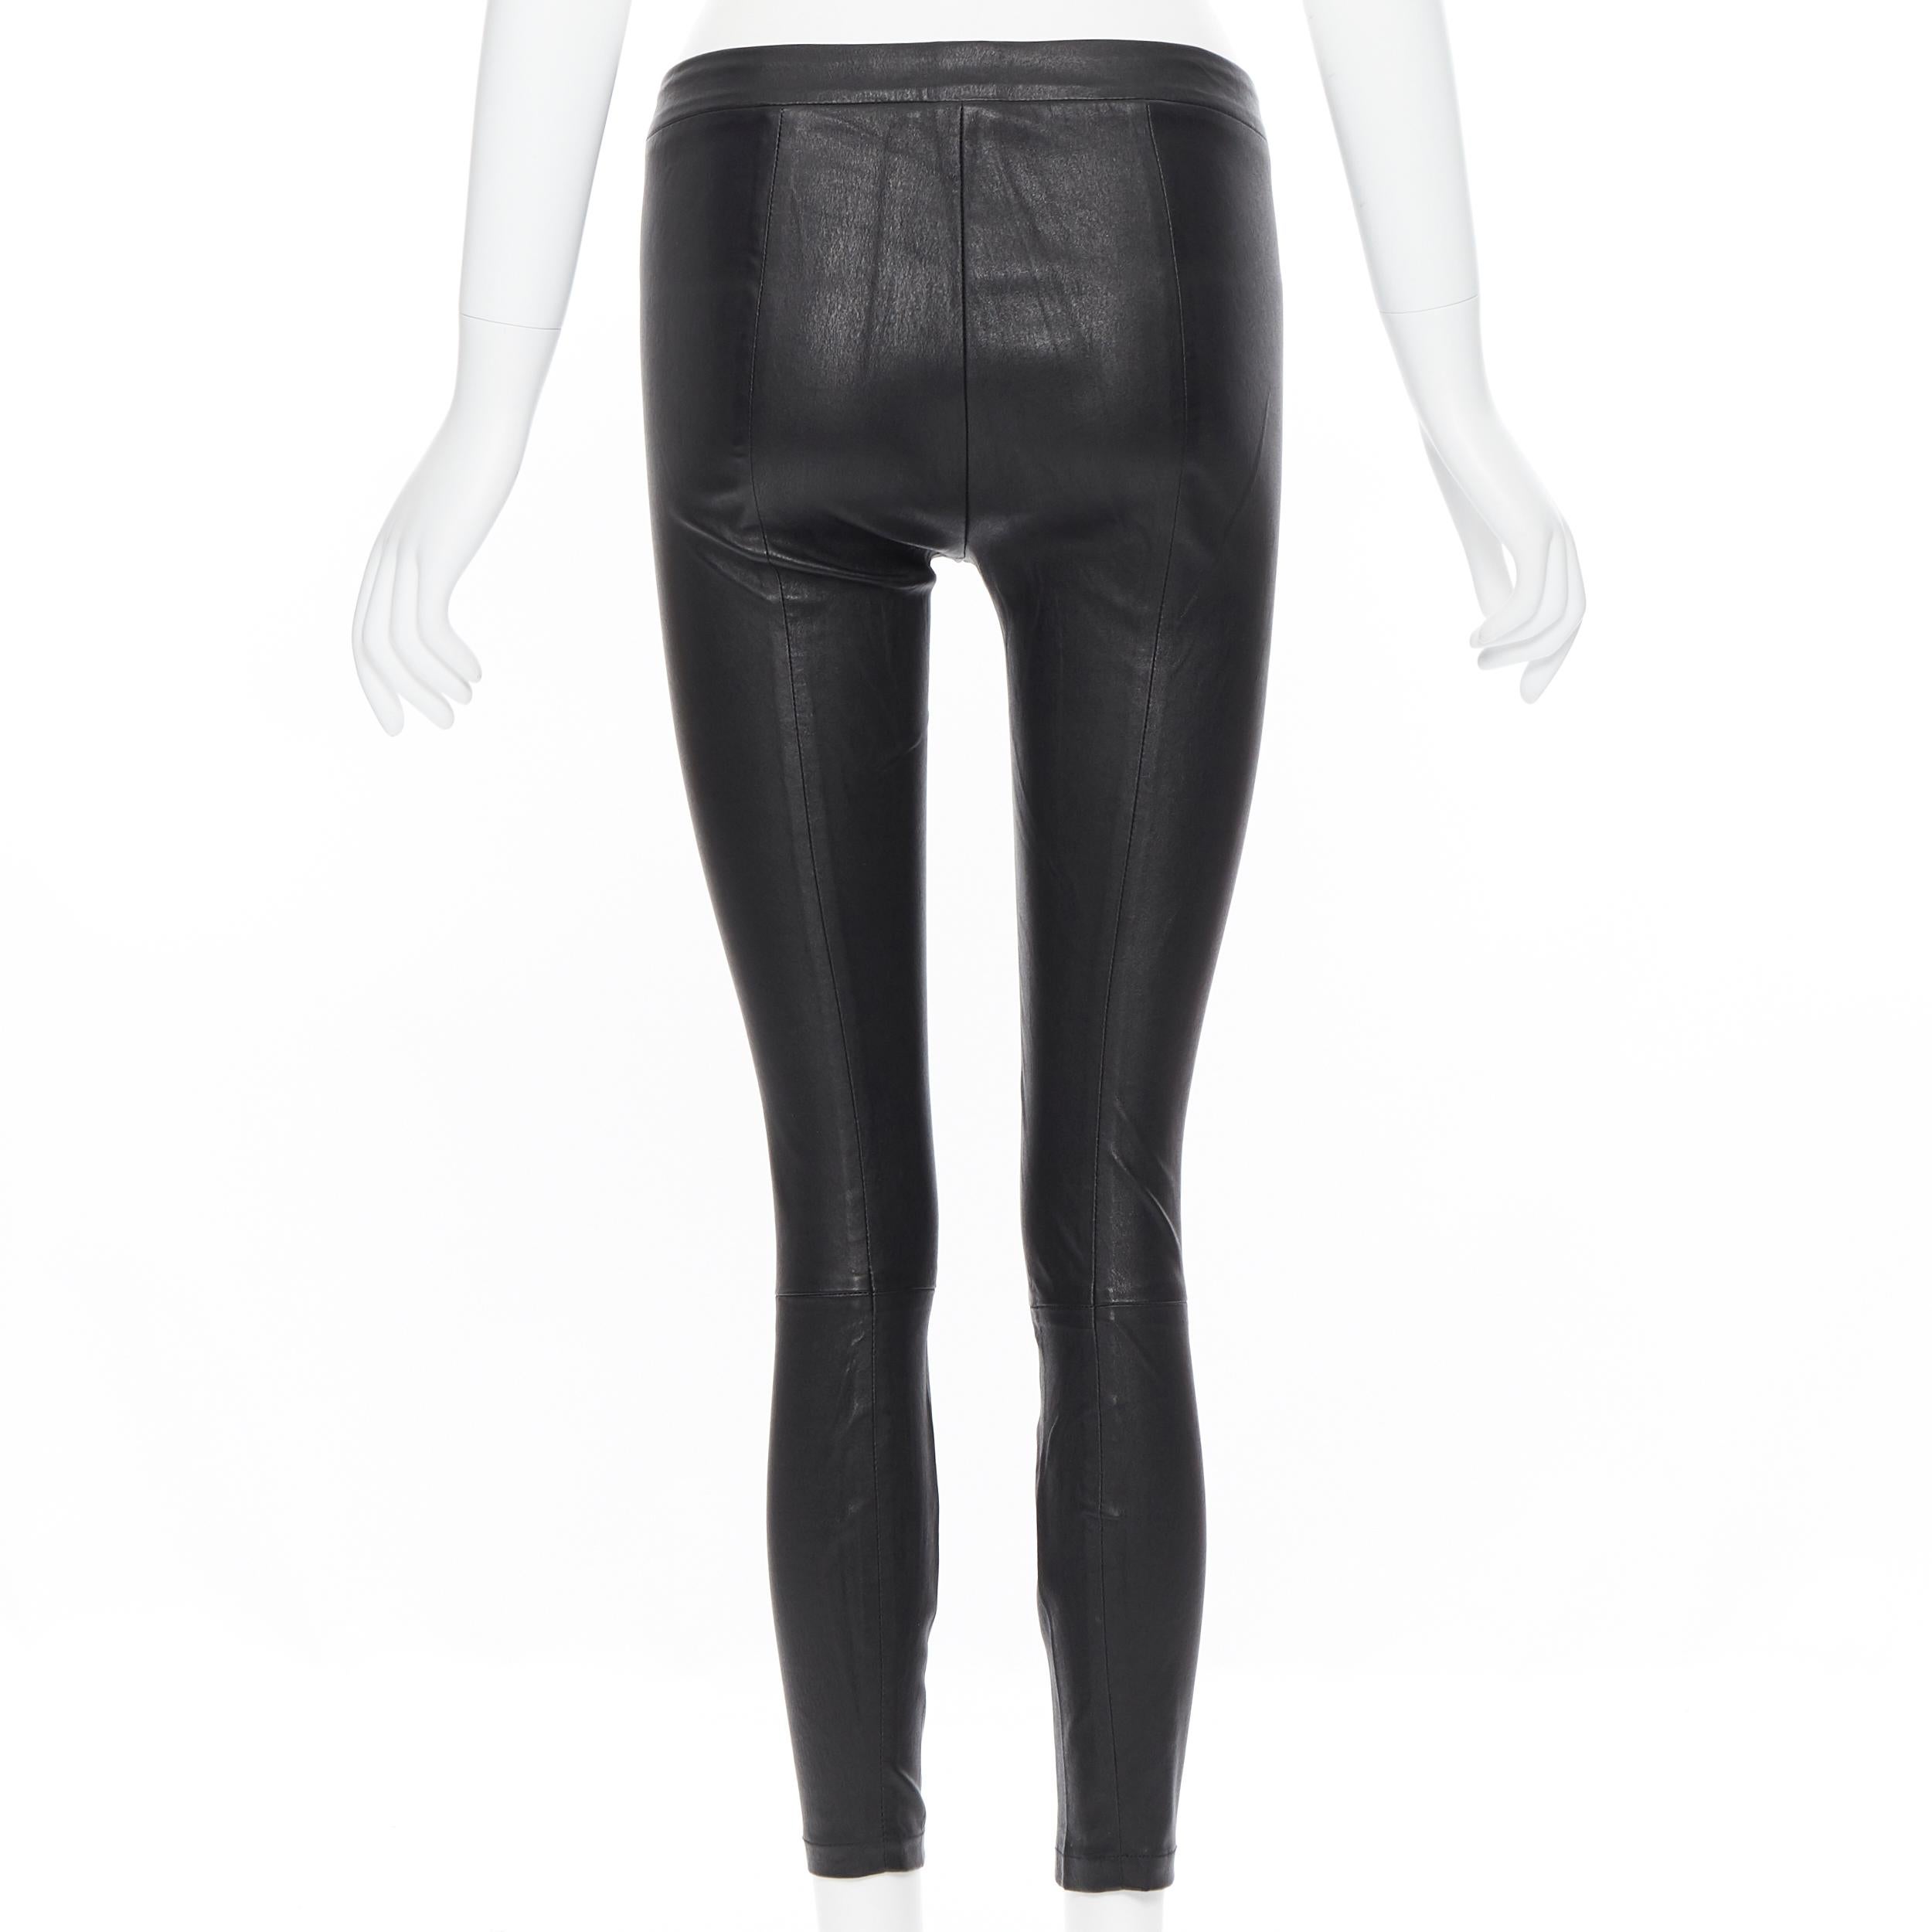 VINCE 100% leather classic black minimal stretchy skinny leg pants XS 1